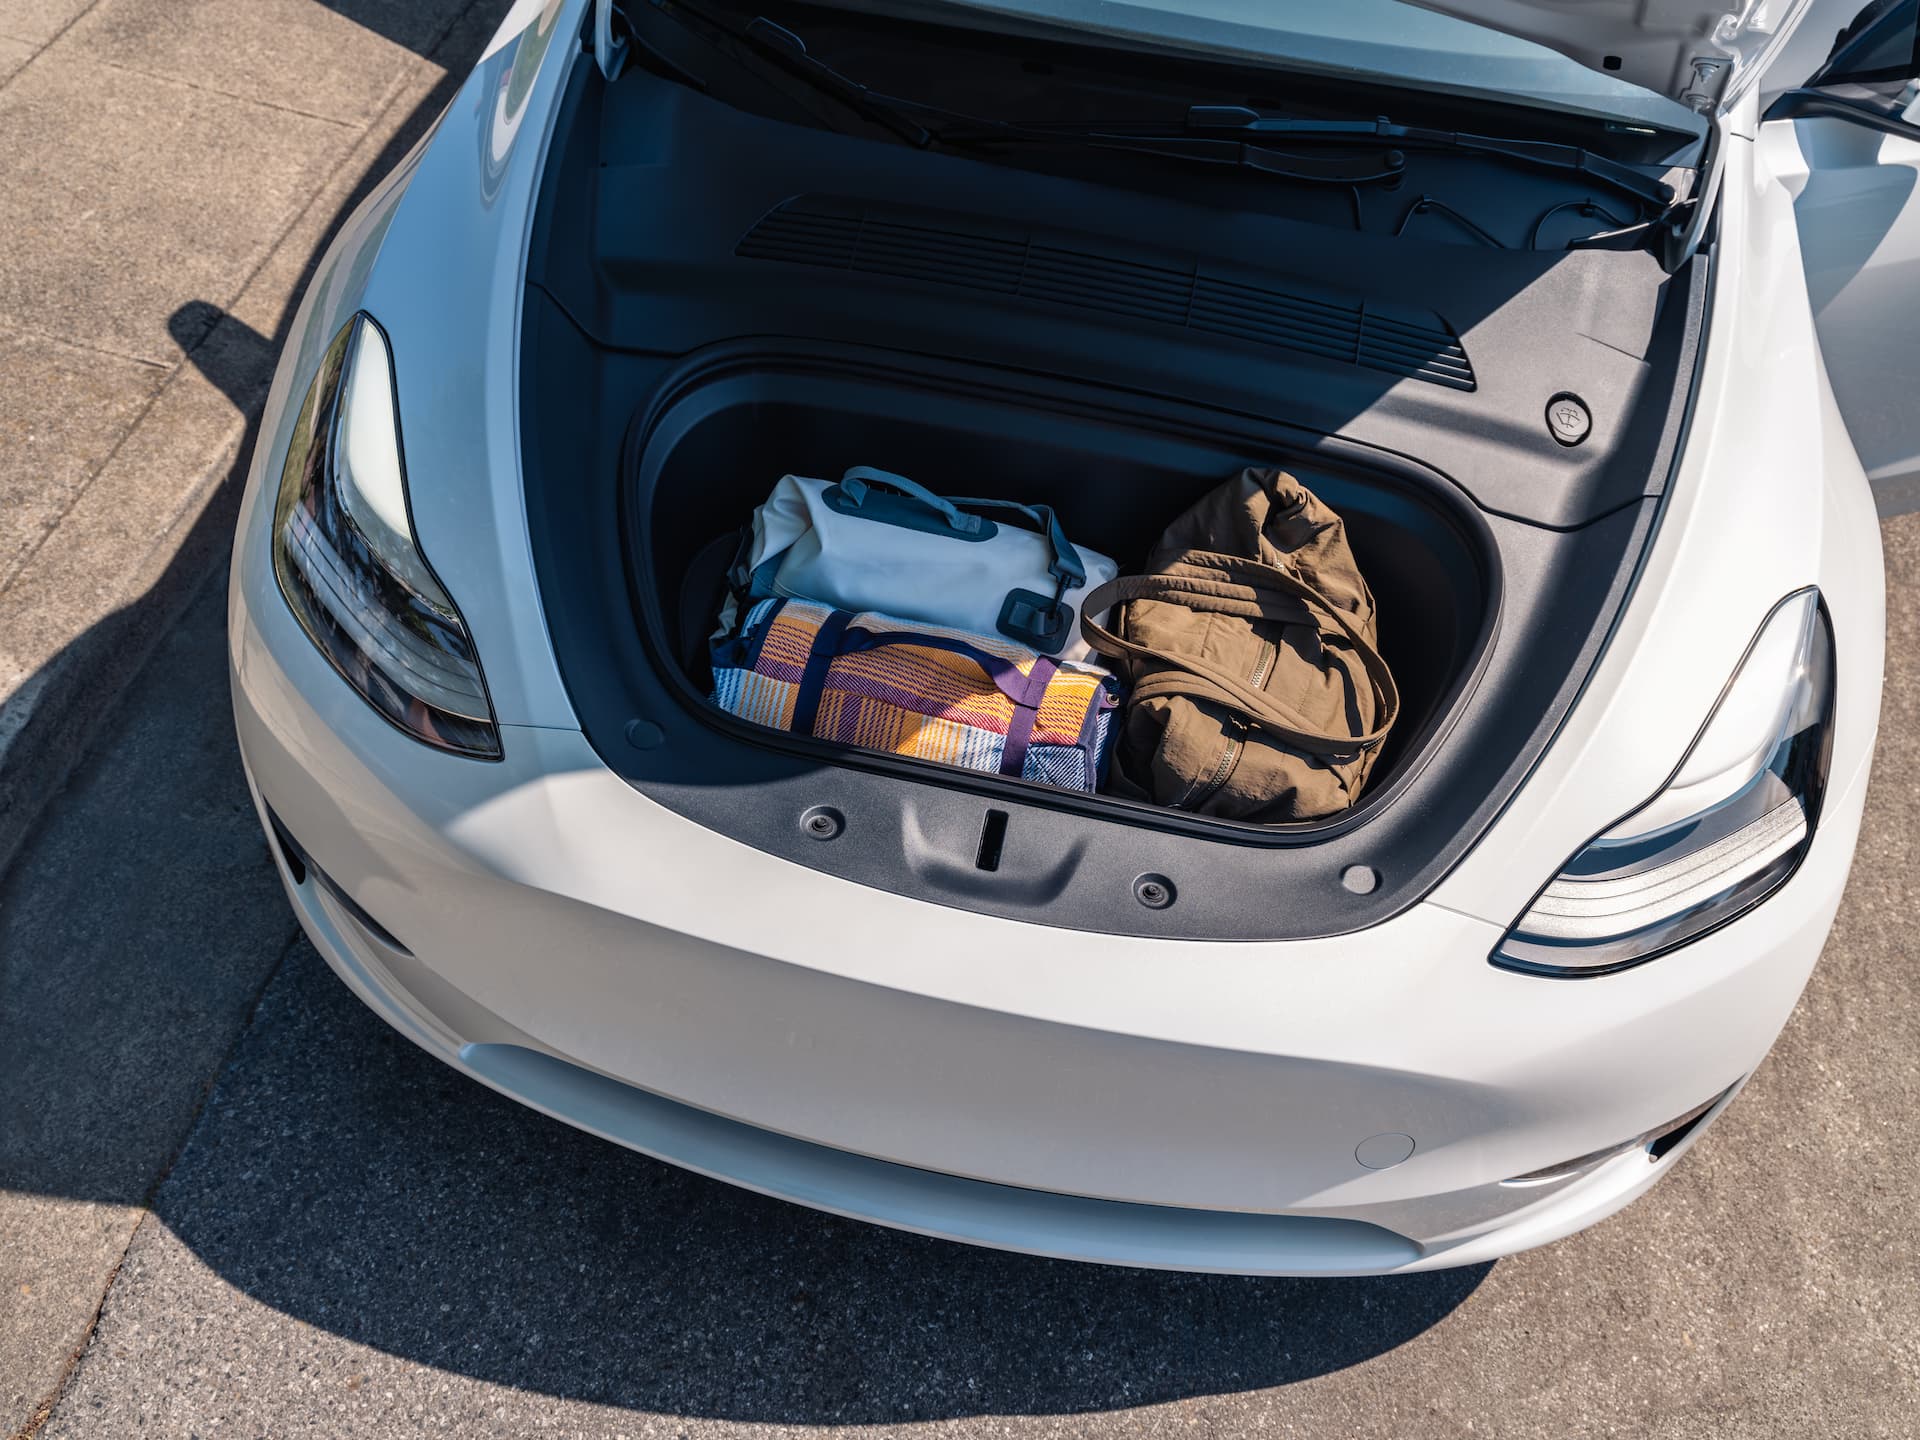 Tesla Model Y frunk stored with bags